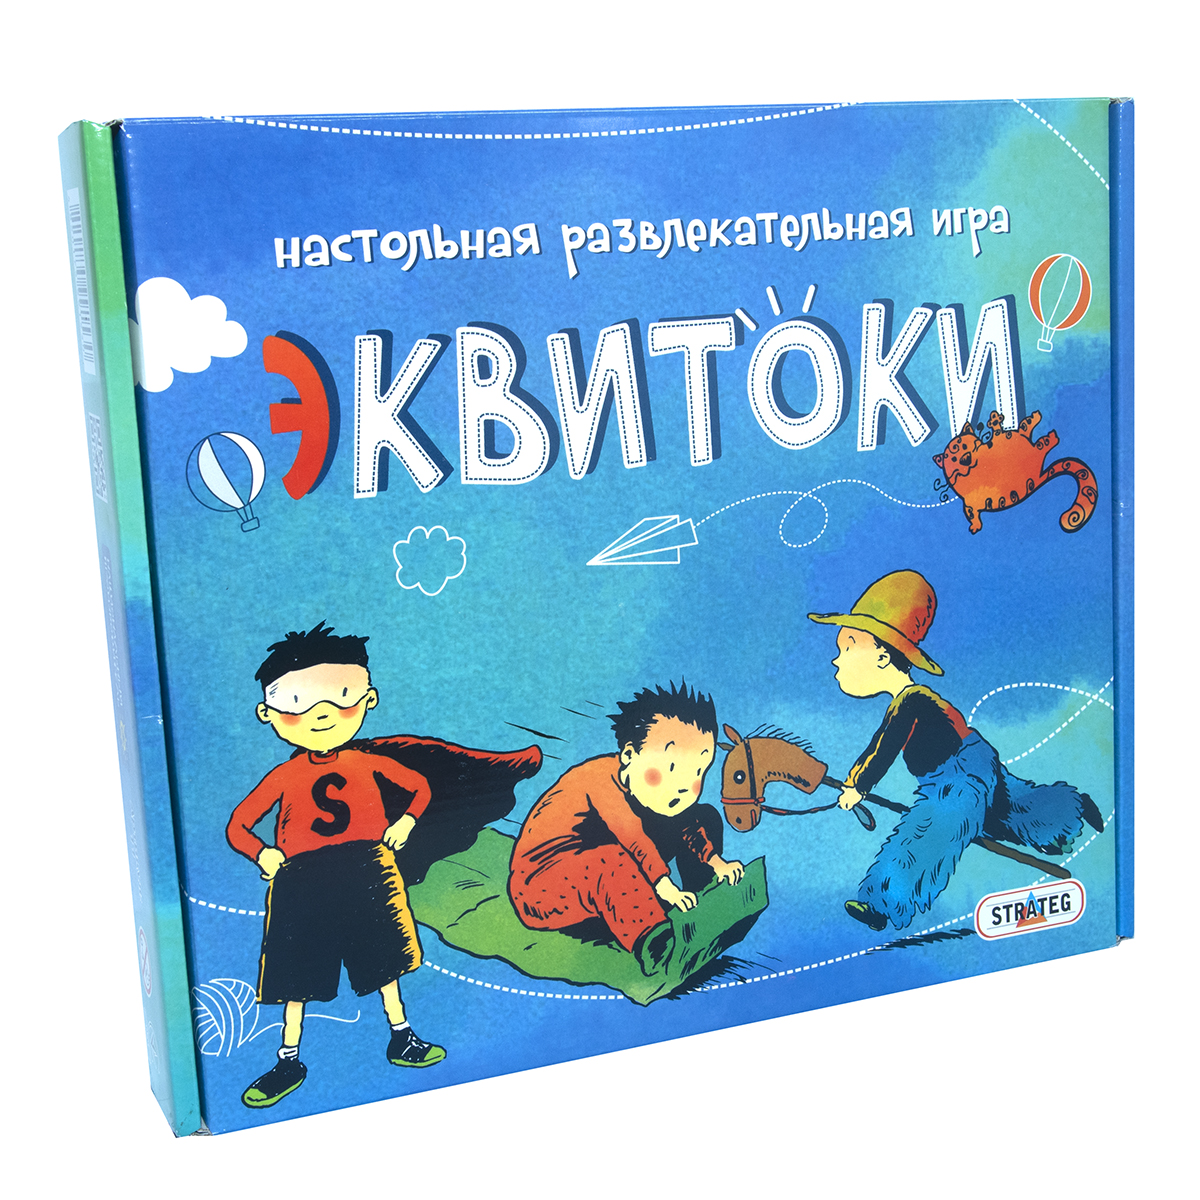 Game "Equitoki, 224 cards" (rus.) (11)